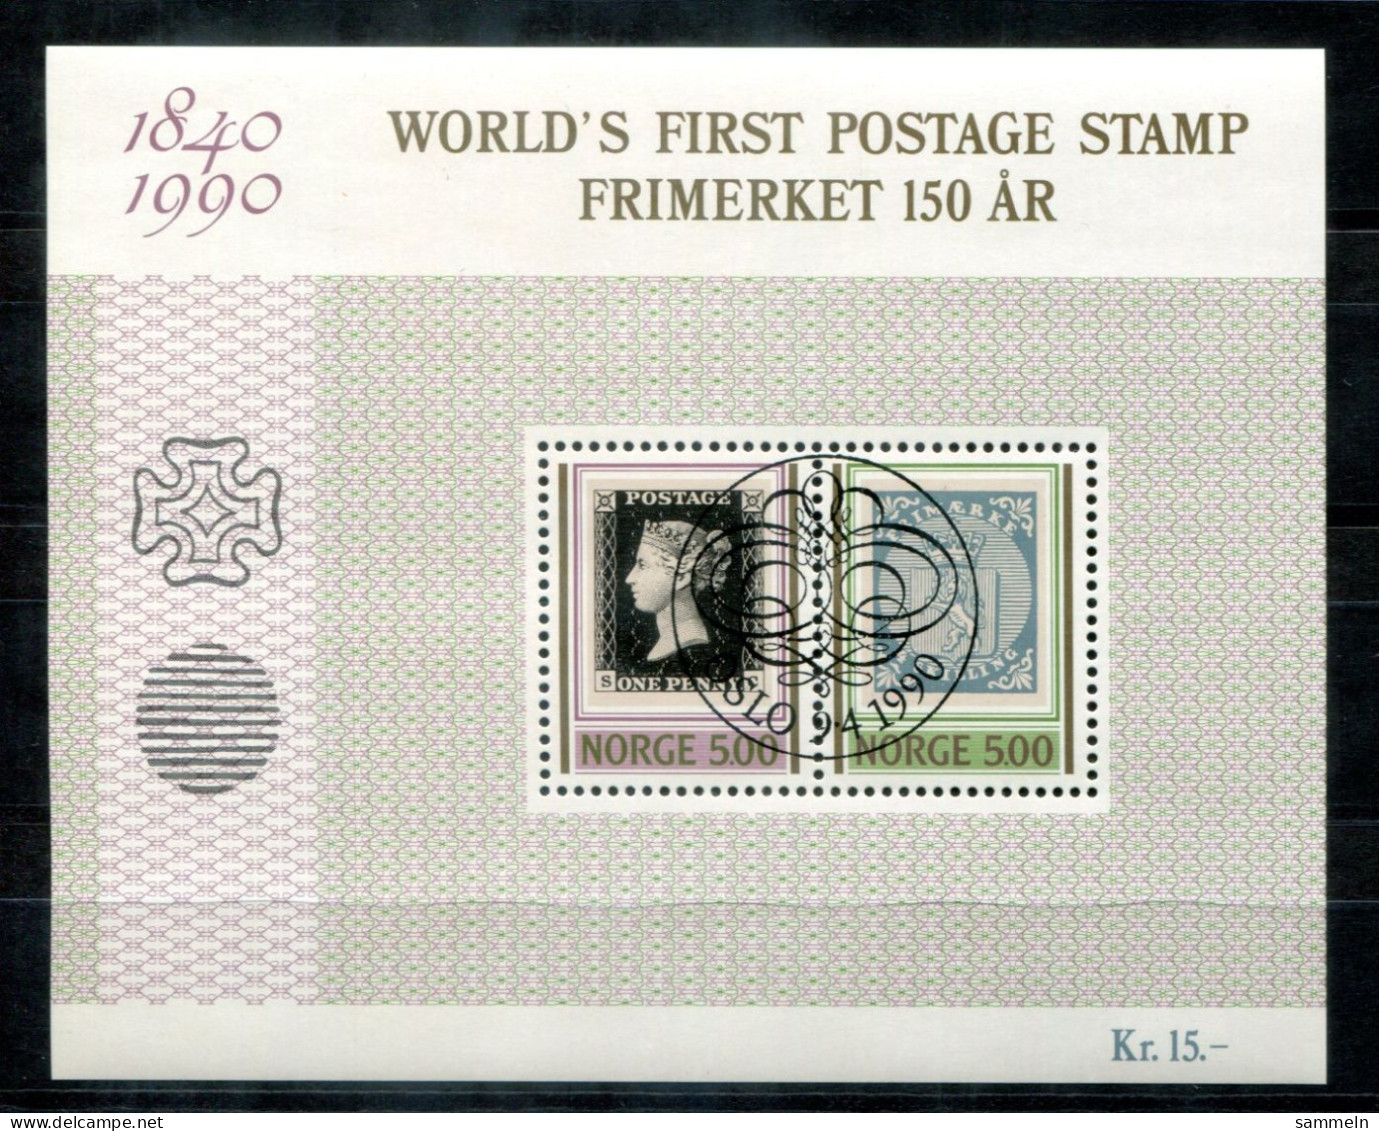 NORWEGEN Block 13, Bl.13 Spec.FD Canc. - Marke Auf Marke, Stamp On Stamp, Timbre Sur Timbre - NORWAY / NORVÈGE - Blocks & Sheetlets